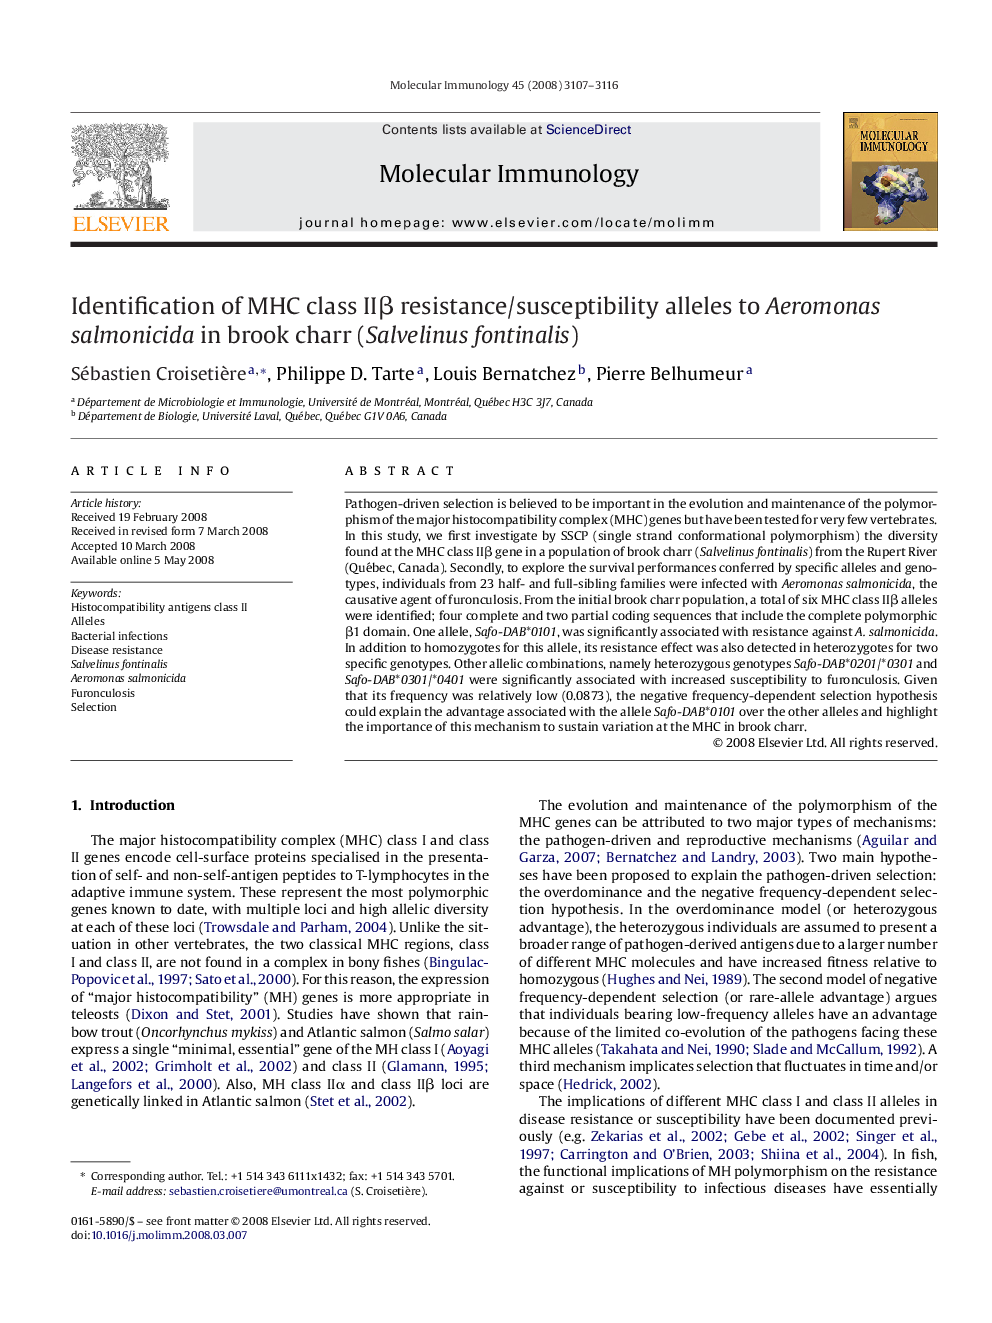 Identification of MHC class IIβ resistance/susceptibility alleles to Aeromonas salmonicida in brook charr (Salvelinus fontinalis)